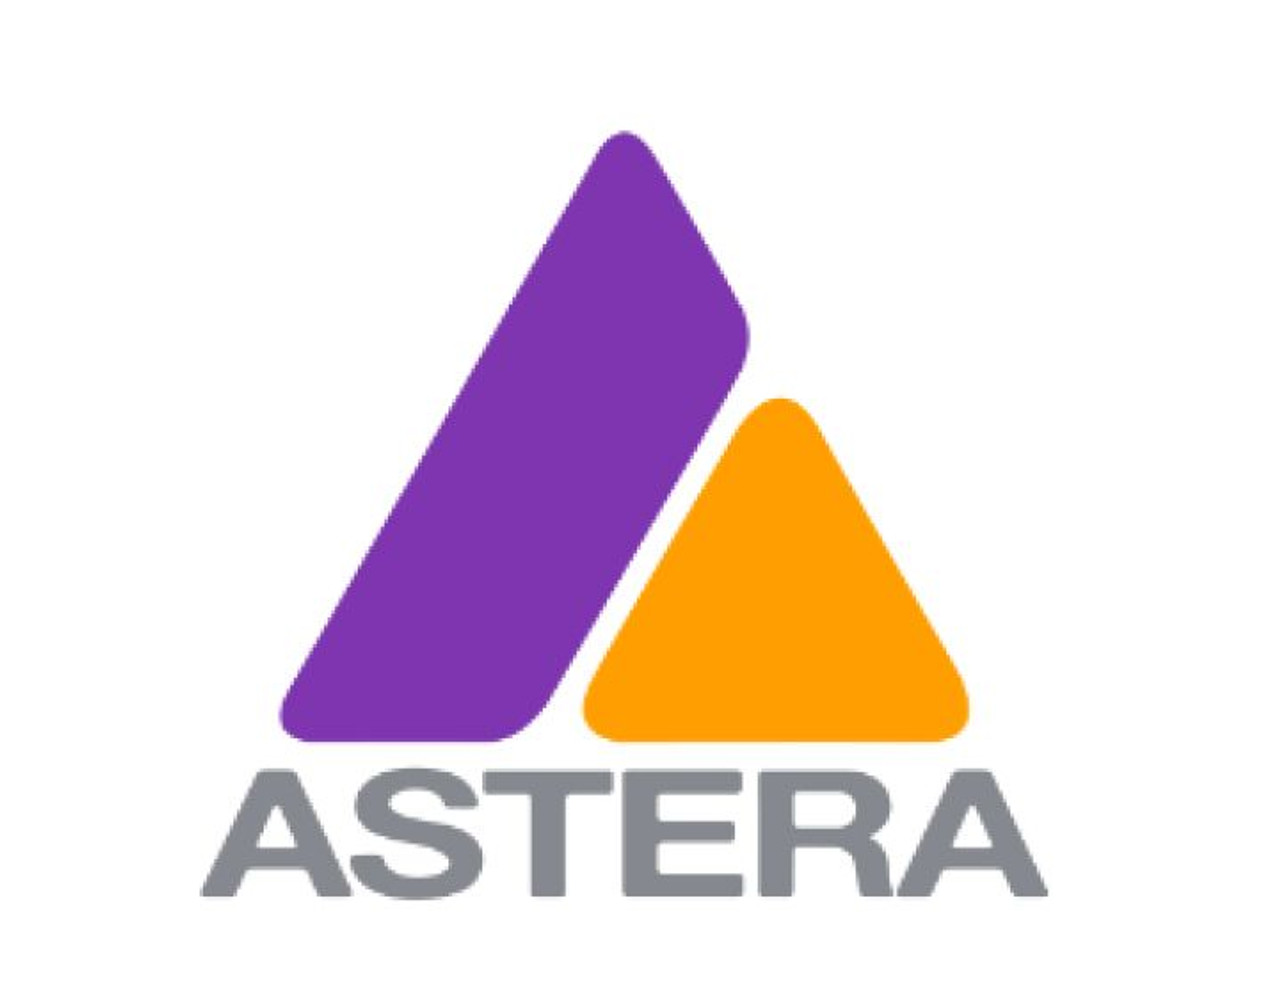 Astera AX3-CHR-U AX3 Charger for Lightdrop (AX3-CHR-U)